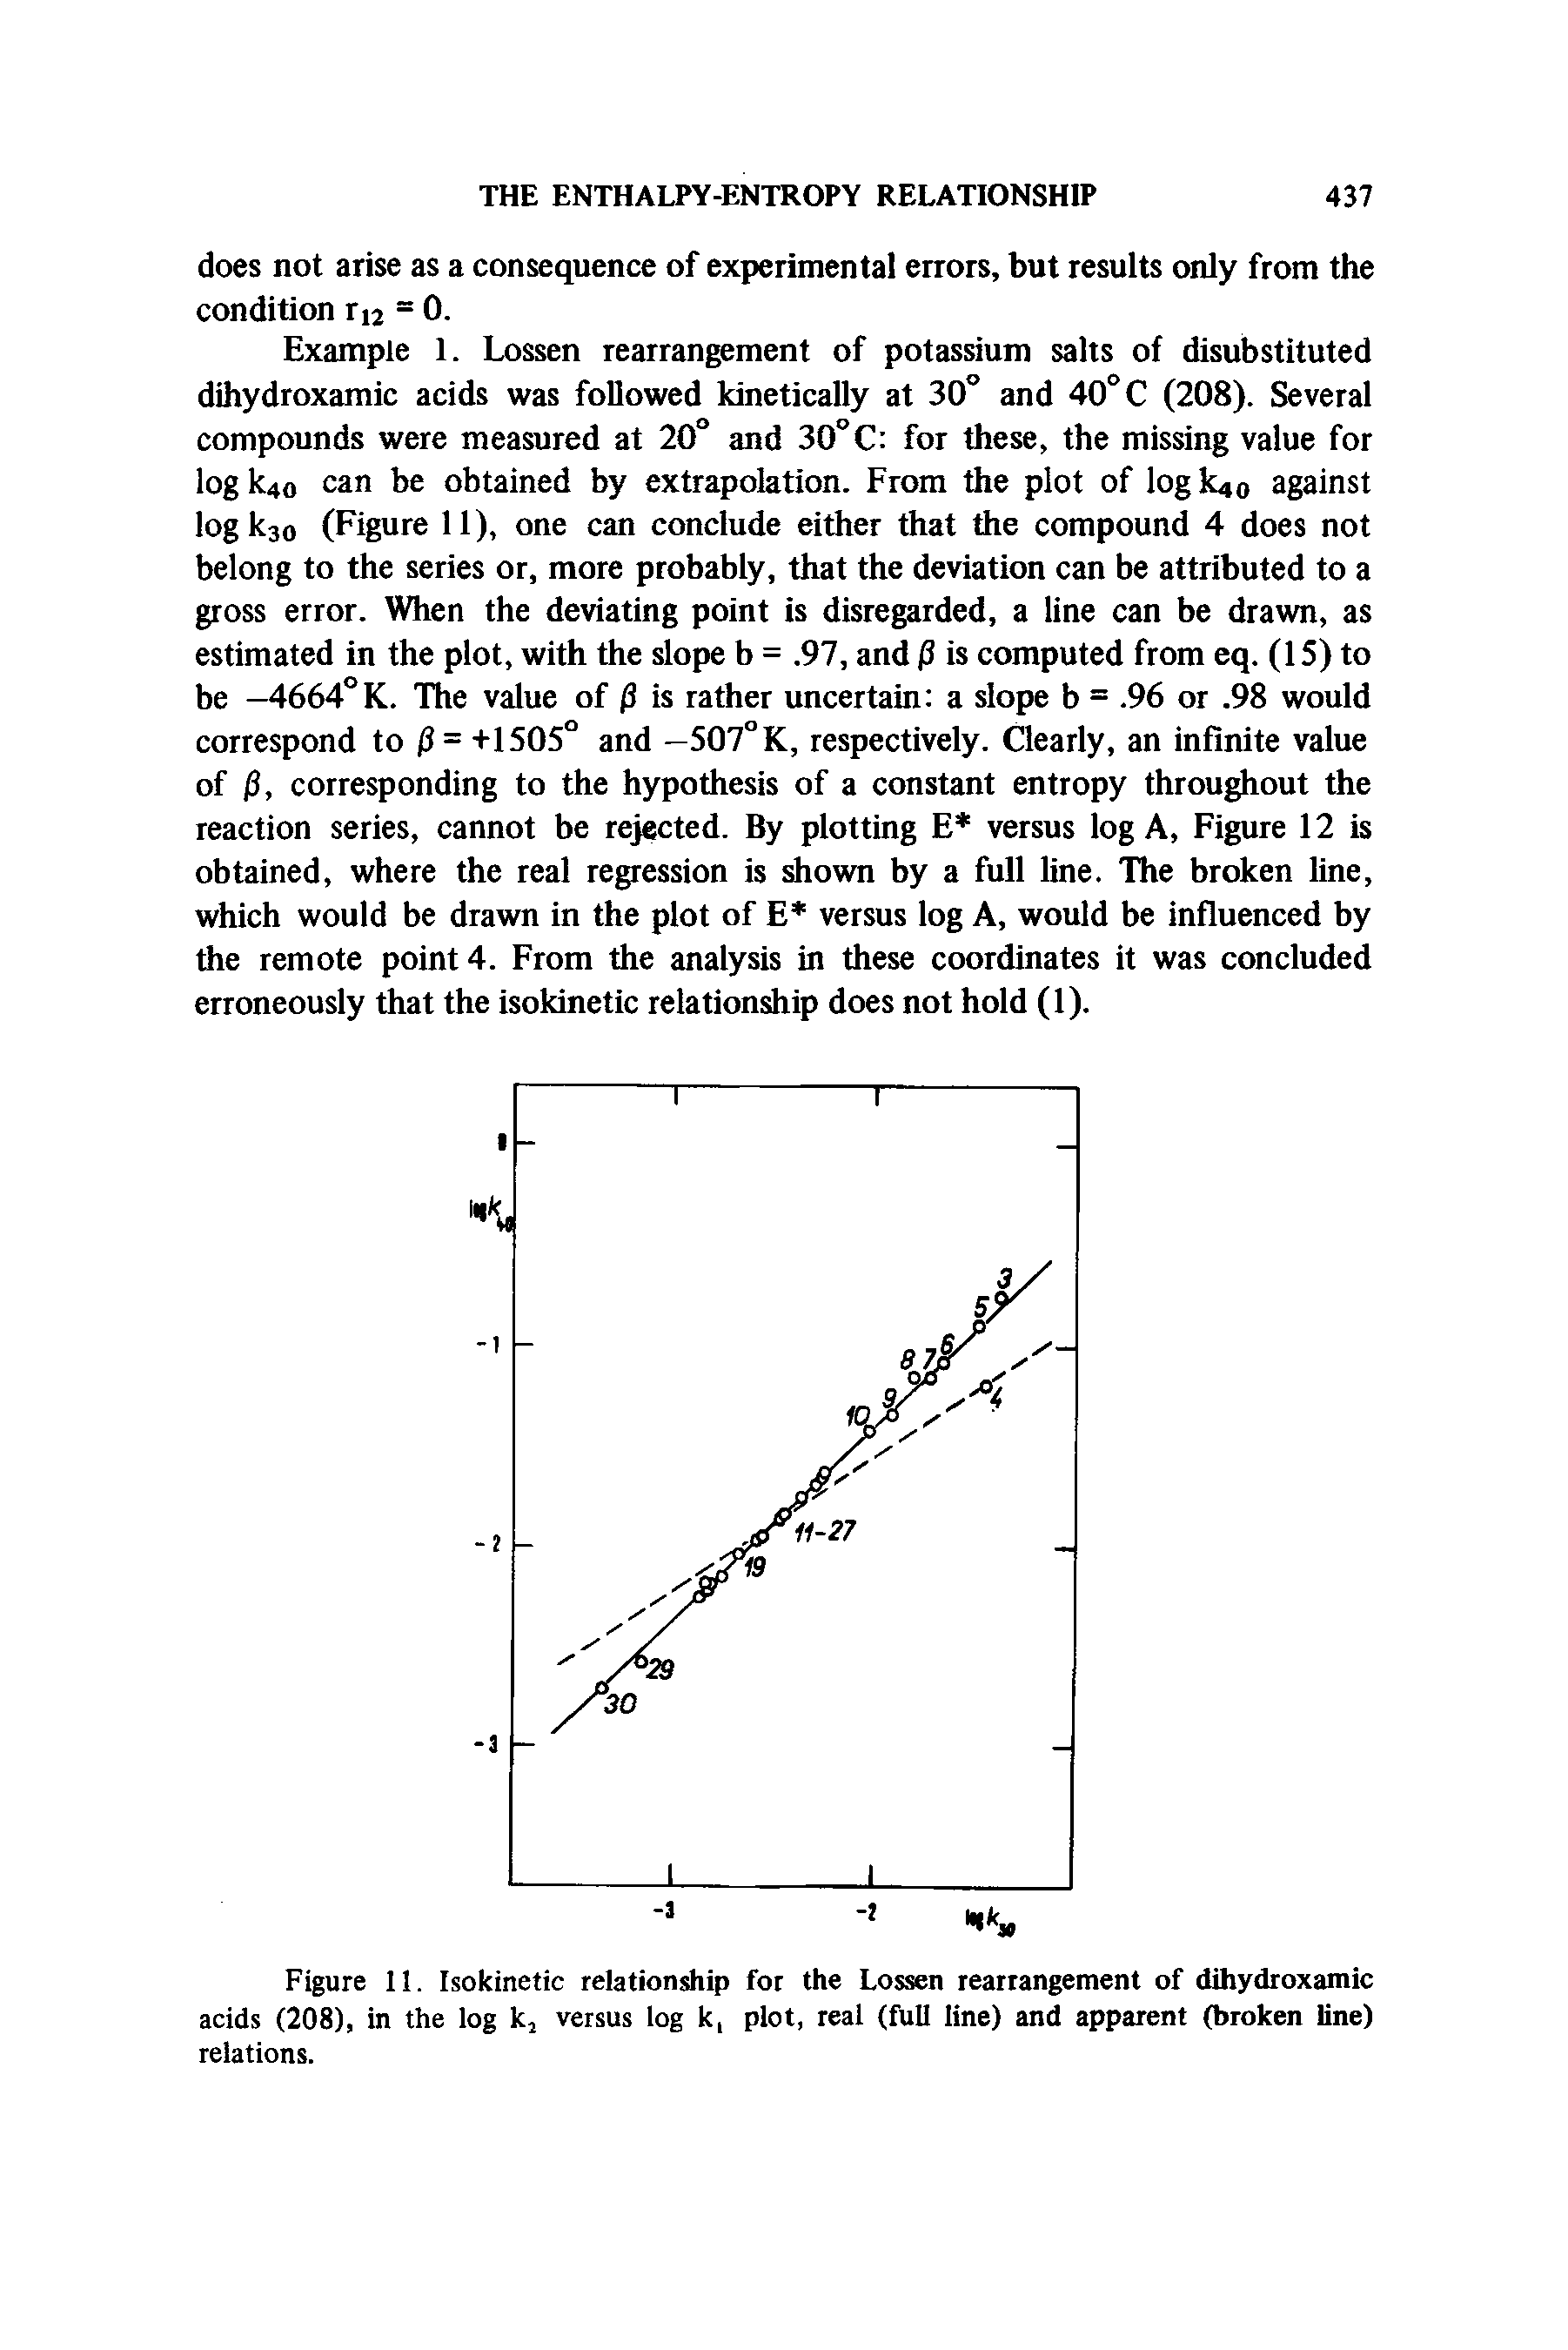 Figure 11. Isokinetic relationship for the Lossen rearrangement of dihydroxamic acids (208), in the log kj versus log k, plot, real (full line) and apparent (broken line) relations.